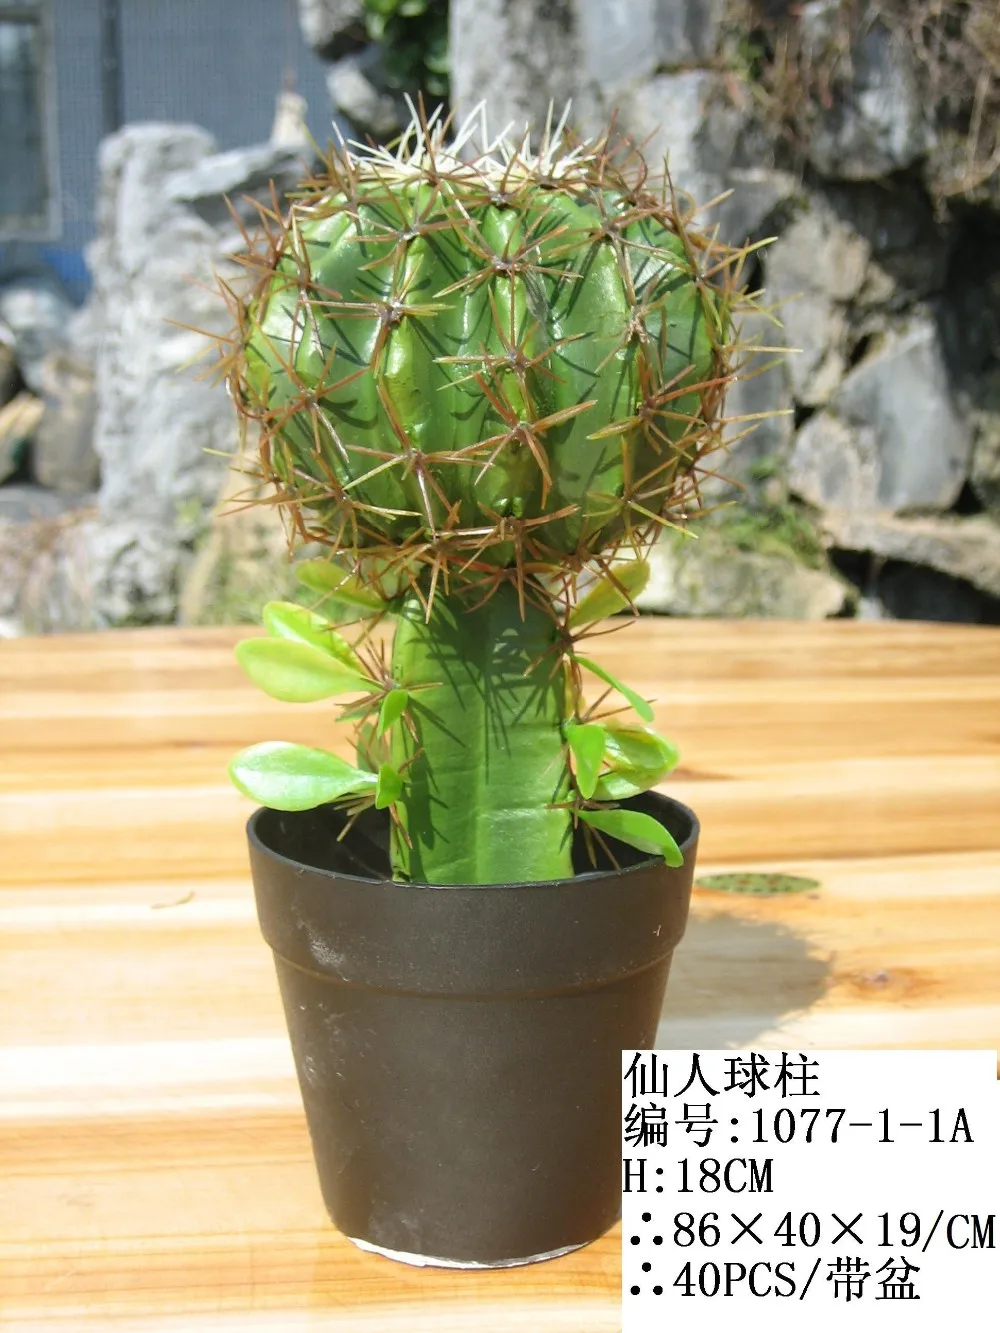 Mini Hx011502 Artificial Cactus Plant For Desk Kit Buy Outdoor